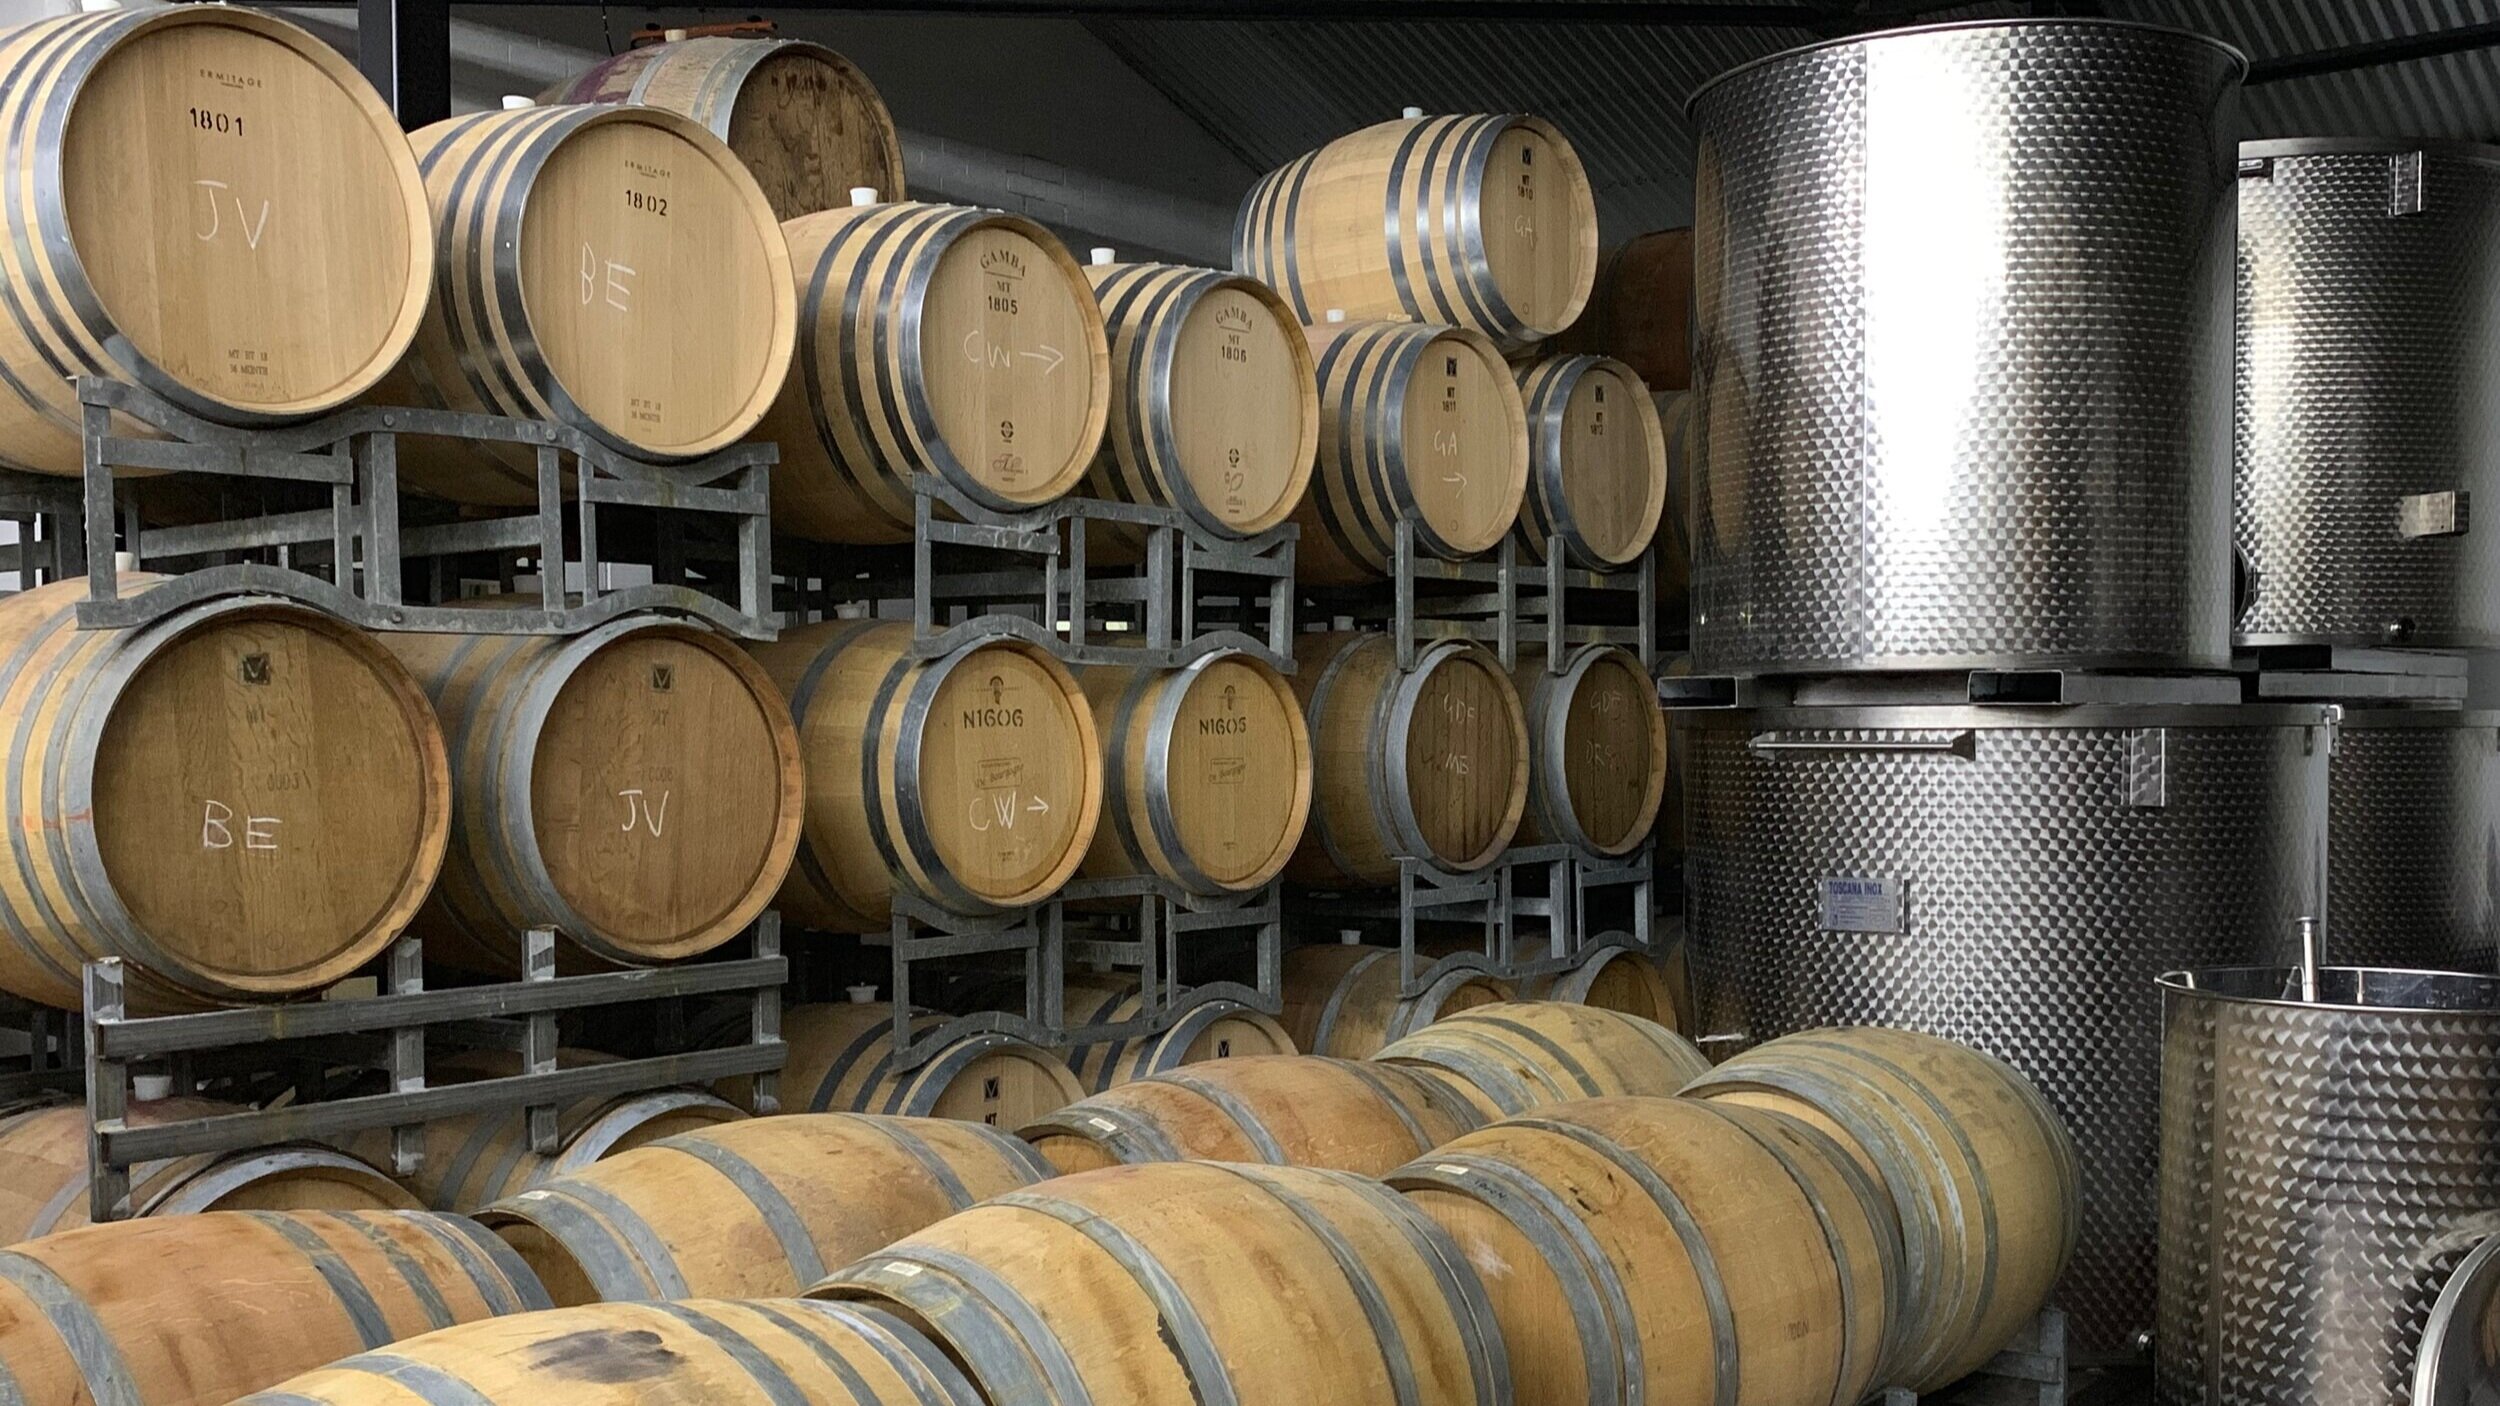  Vinsight Wine Sydney NSW Wine Distriubtor - Glaetzer-Dixon - Wine Barrels 